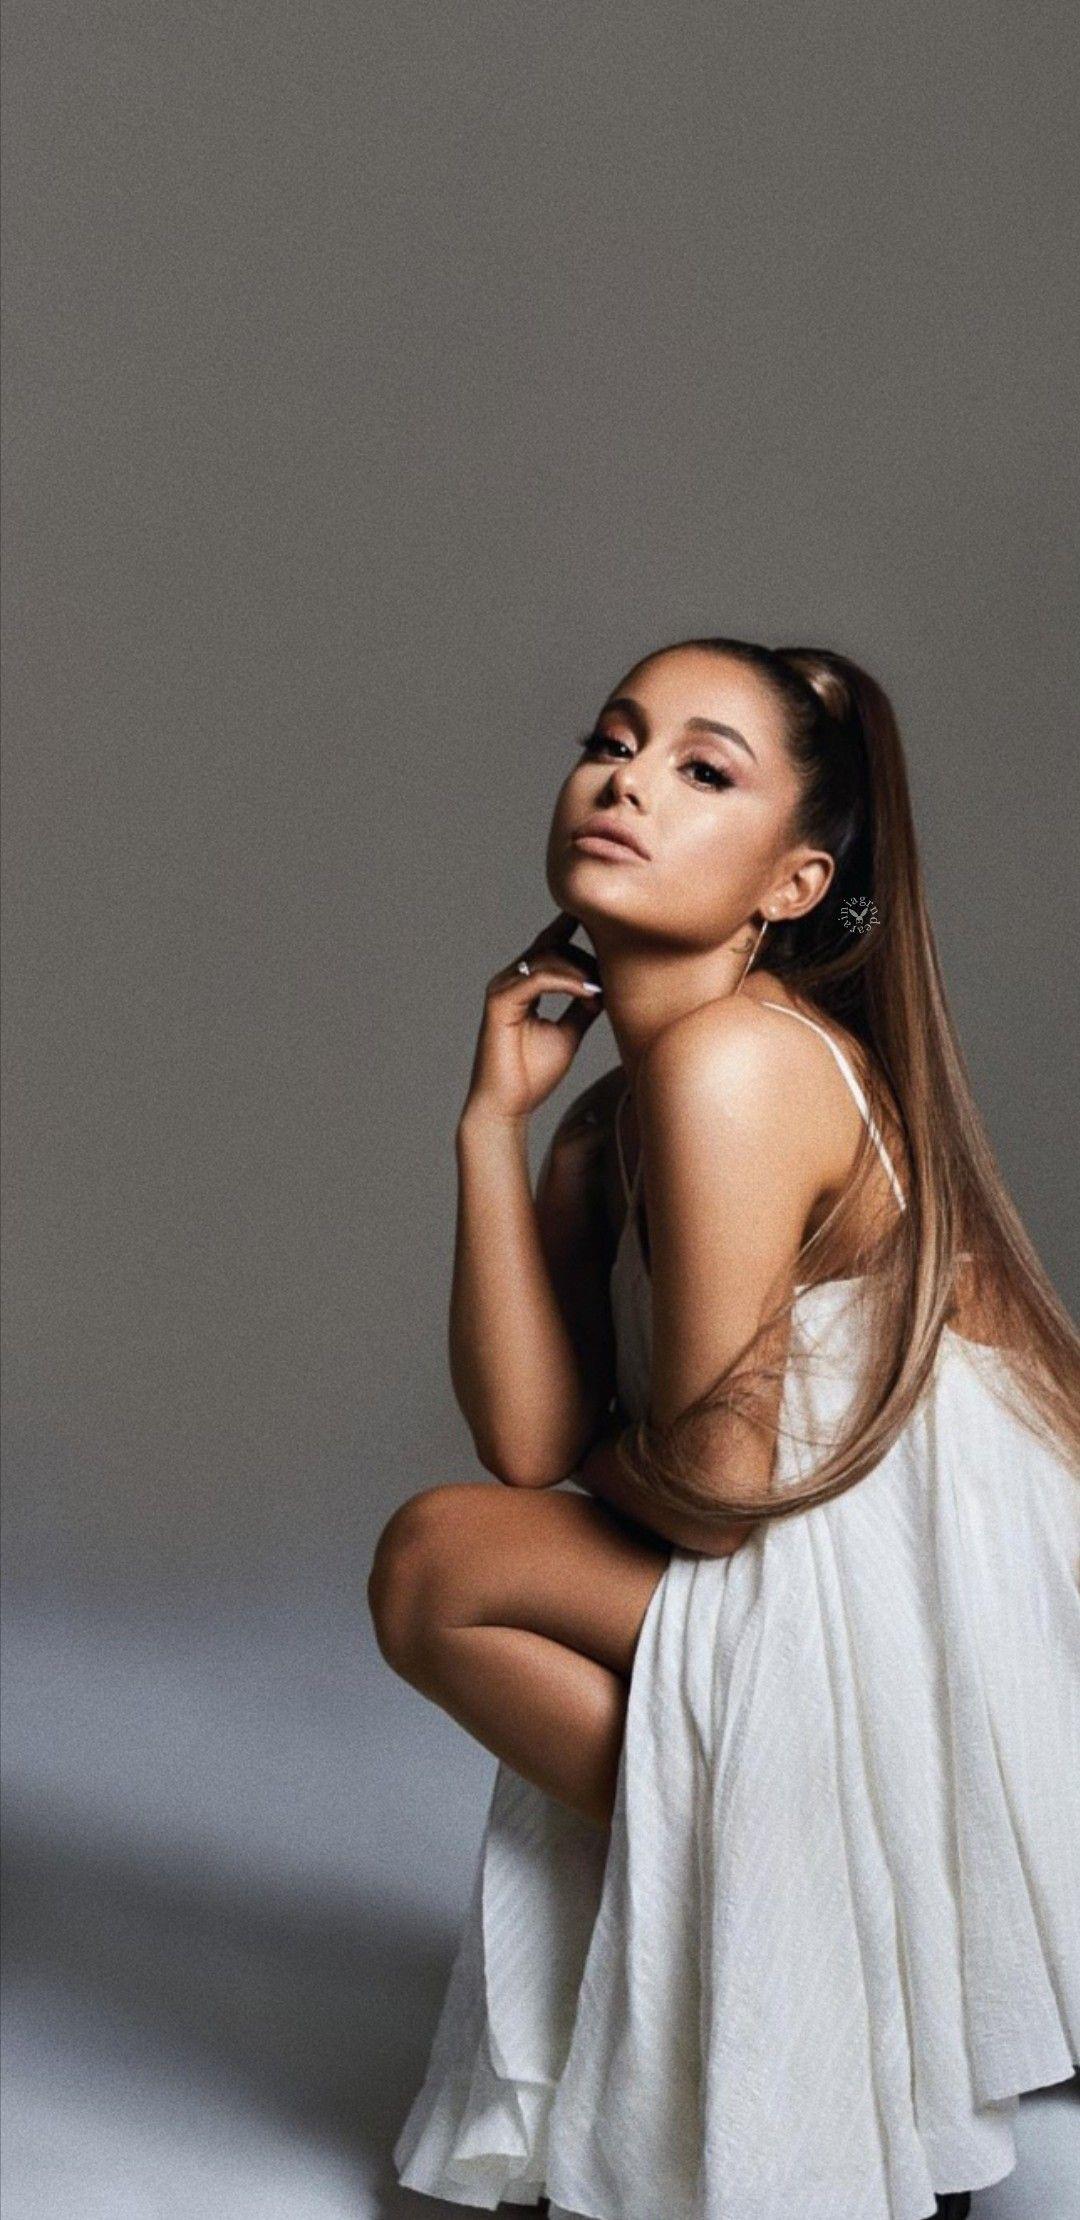 Ariana Grande 2019 Wallpapers Top Free Ariana Grande 2019